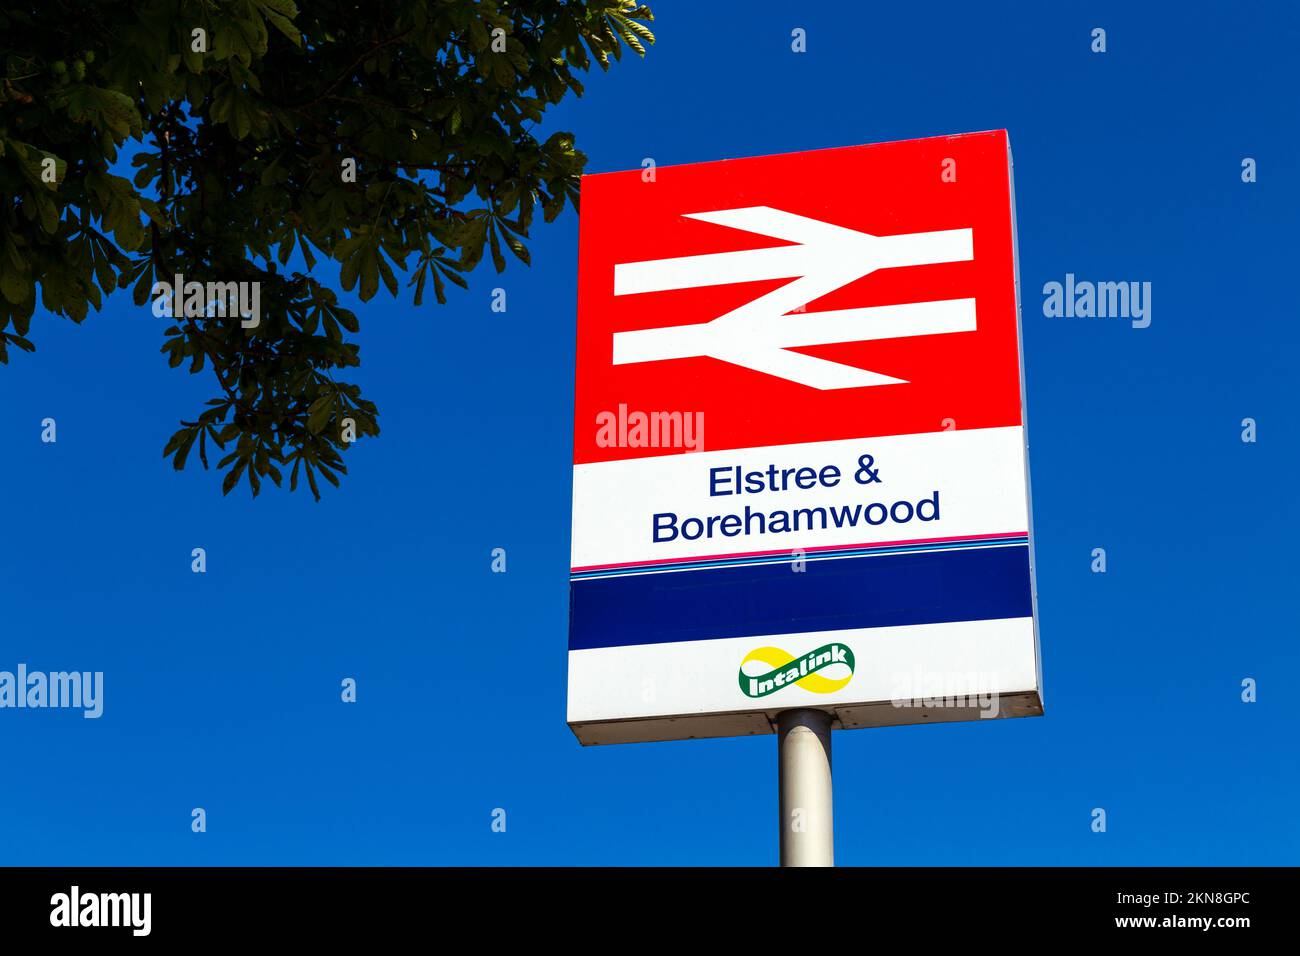 Sign for Elstree & Borehamwood rail station, Borehamwood, Hertfordshire, UK Stock Photo